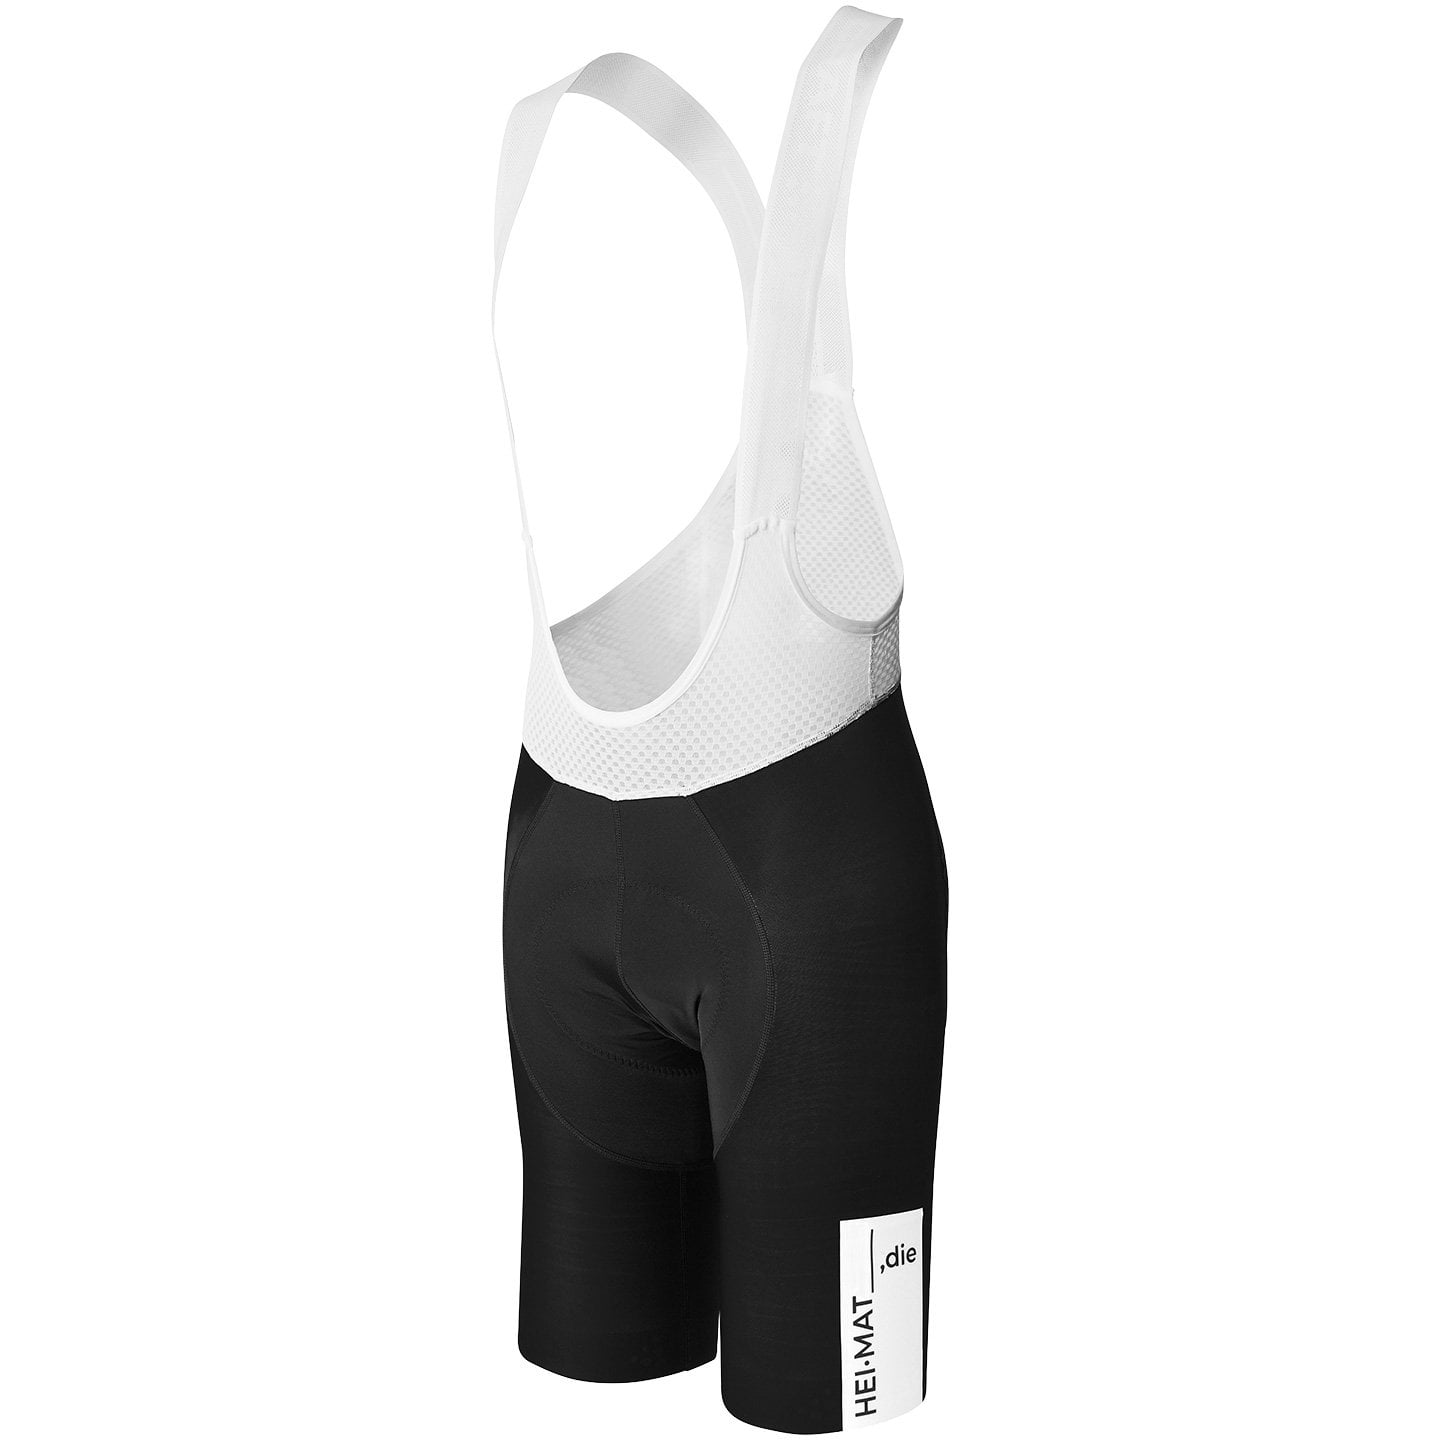 CRAFT von Brokk "Heimat, die" Bib Shorts Bib Shorts, for men, size 2XL, Cycle shorts, Cycling clothing